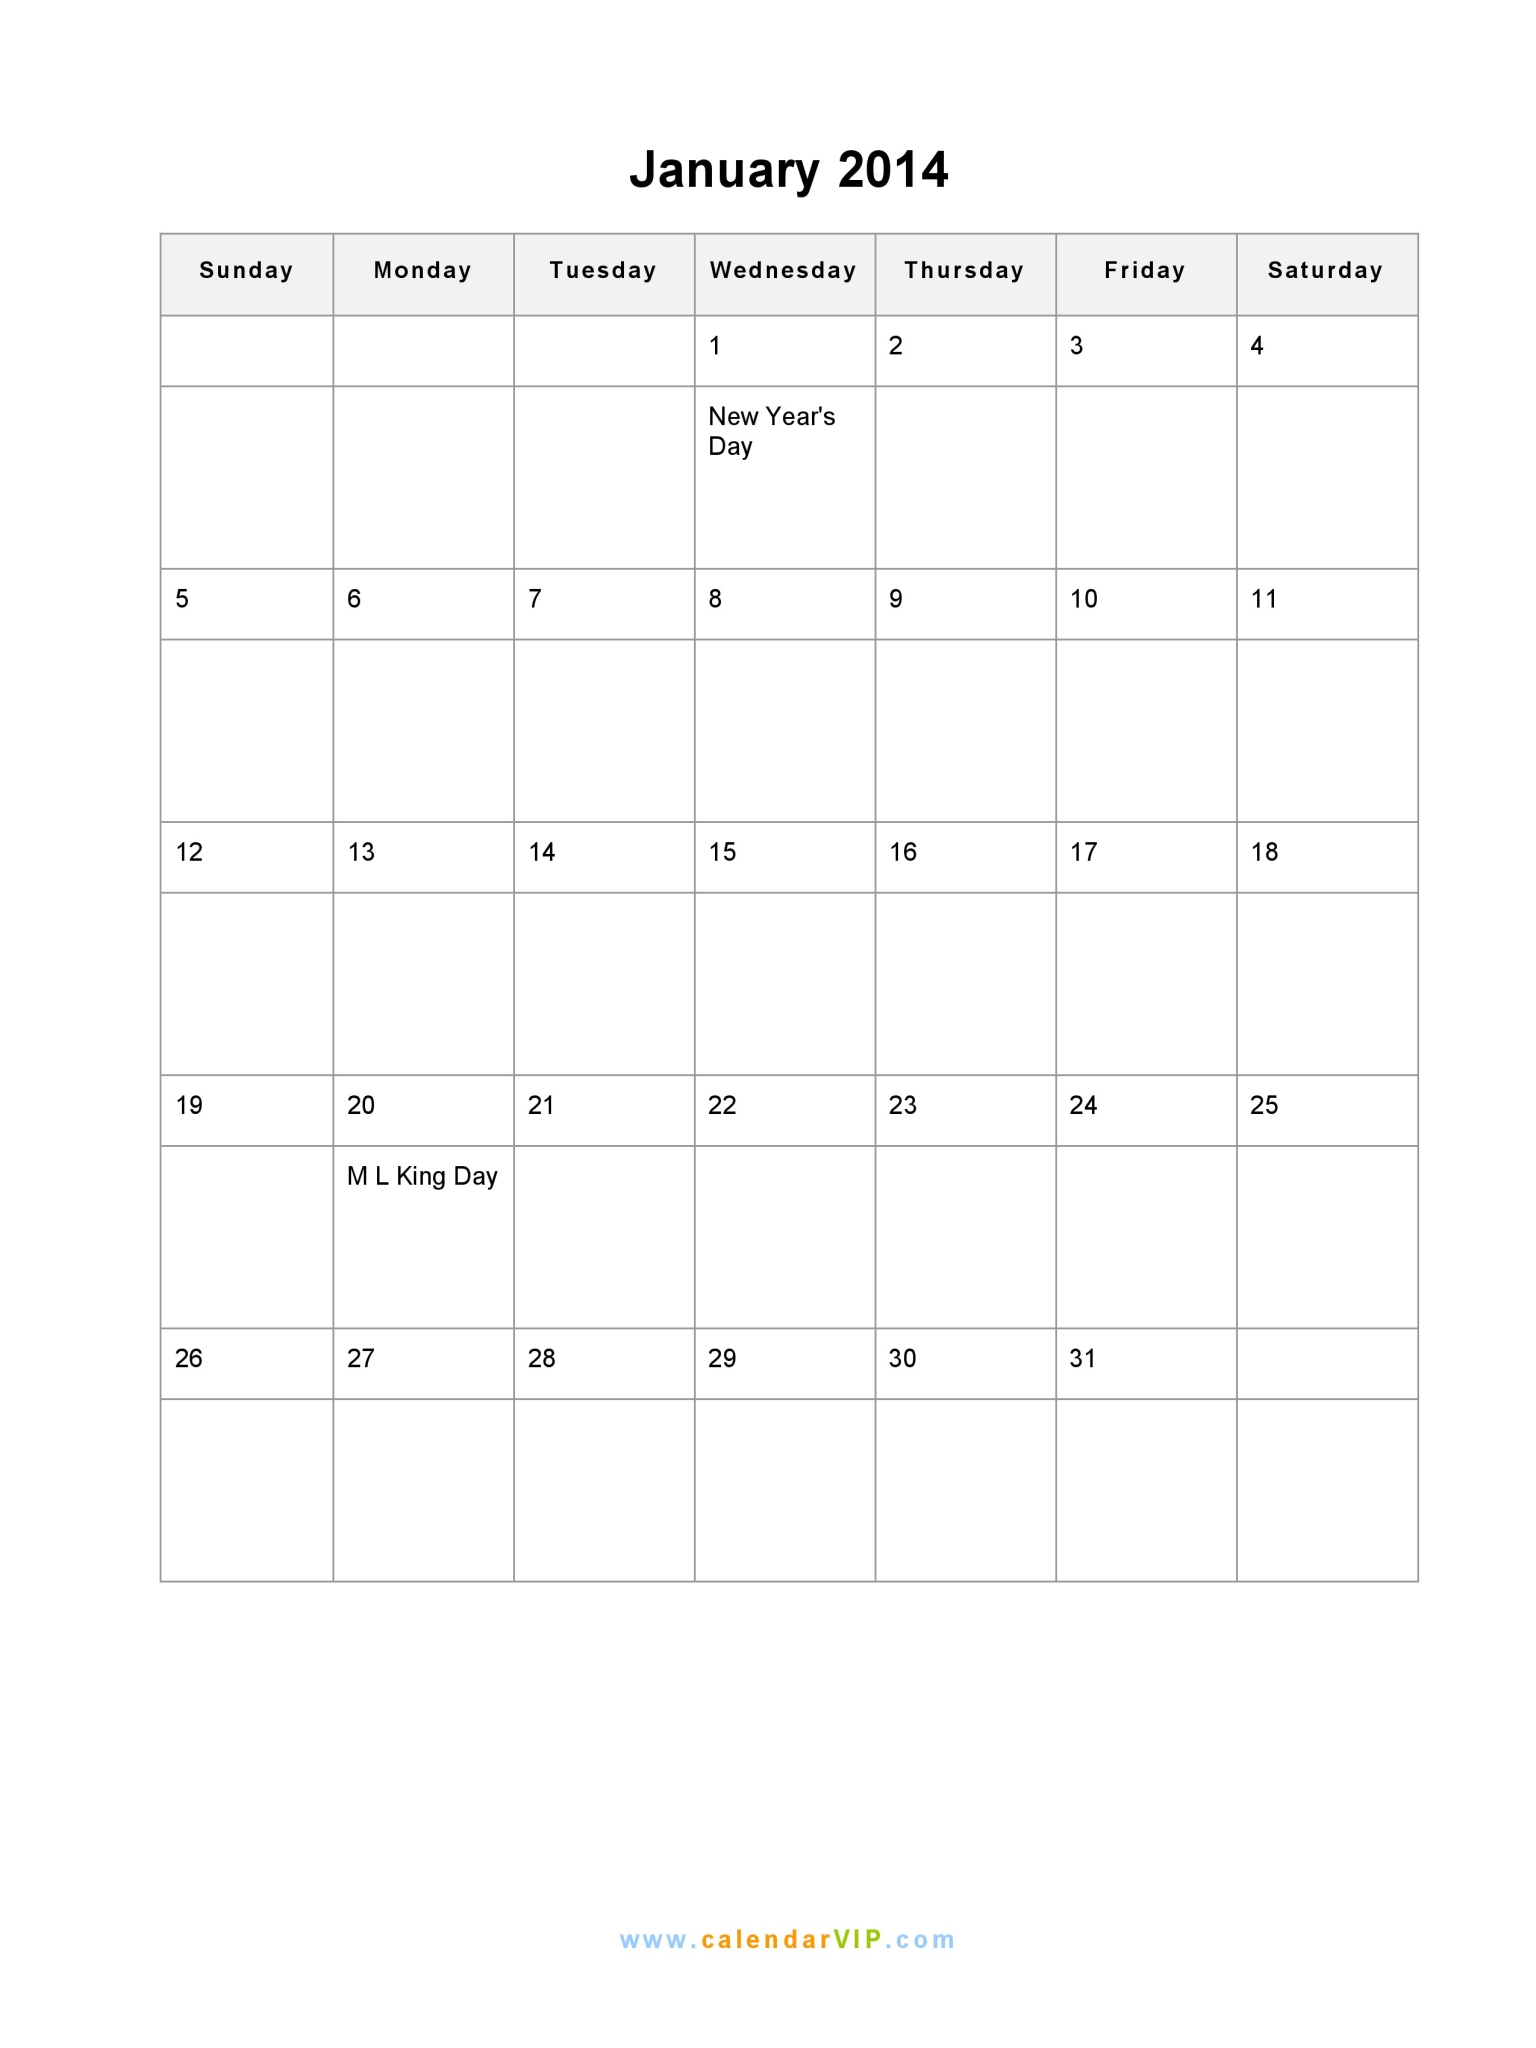 January 2014 Calendar - Blank Printable Calendar Template in PDF Word Excel1536 x 2048